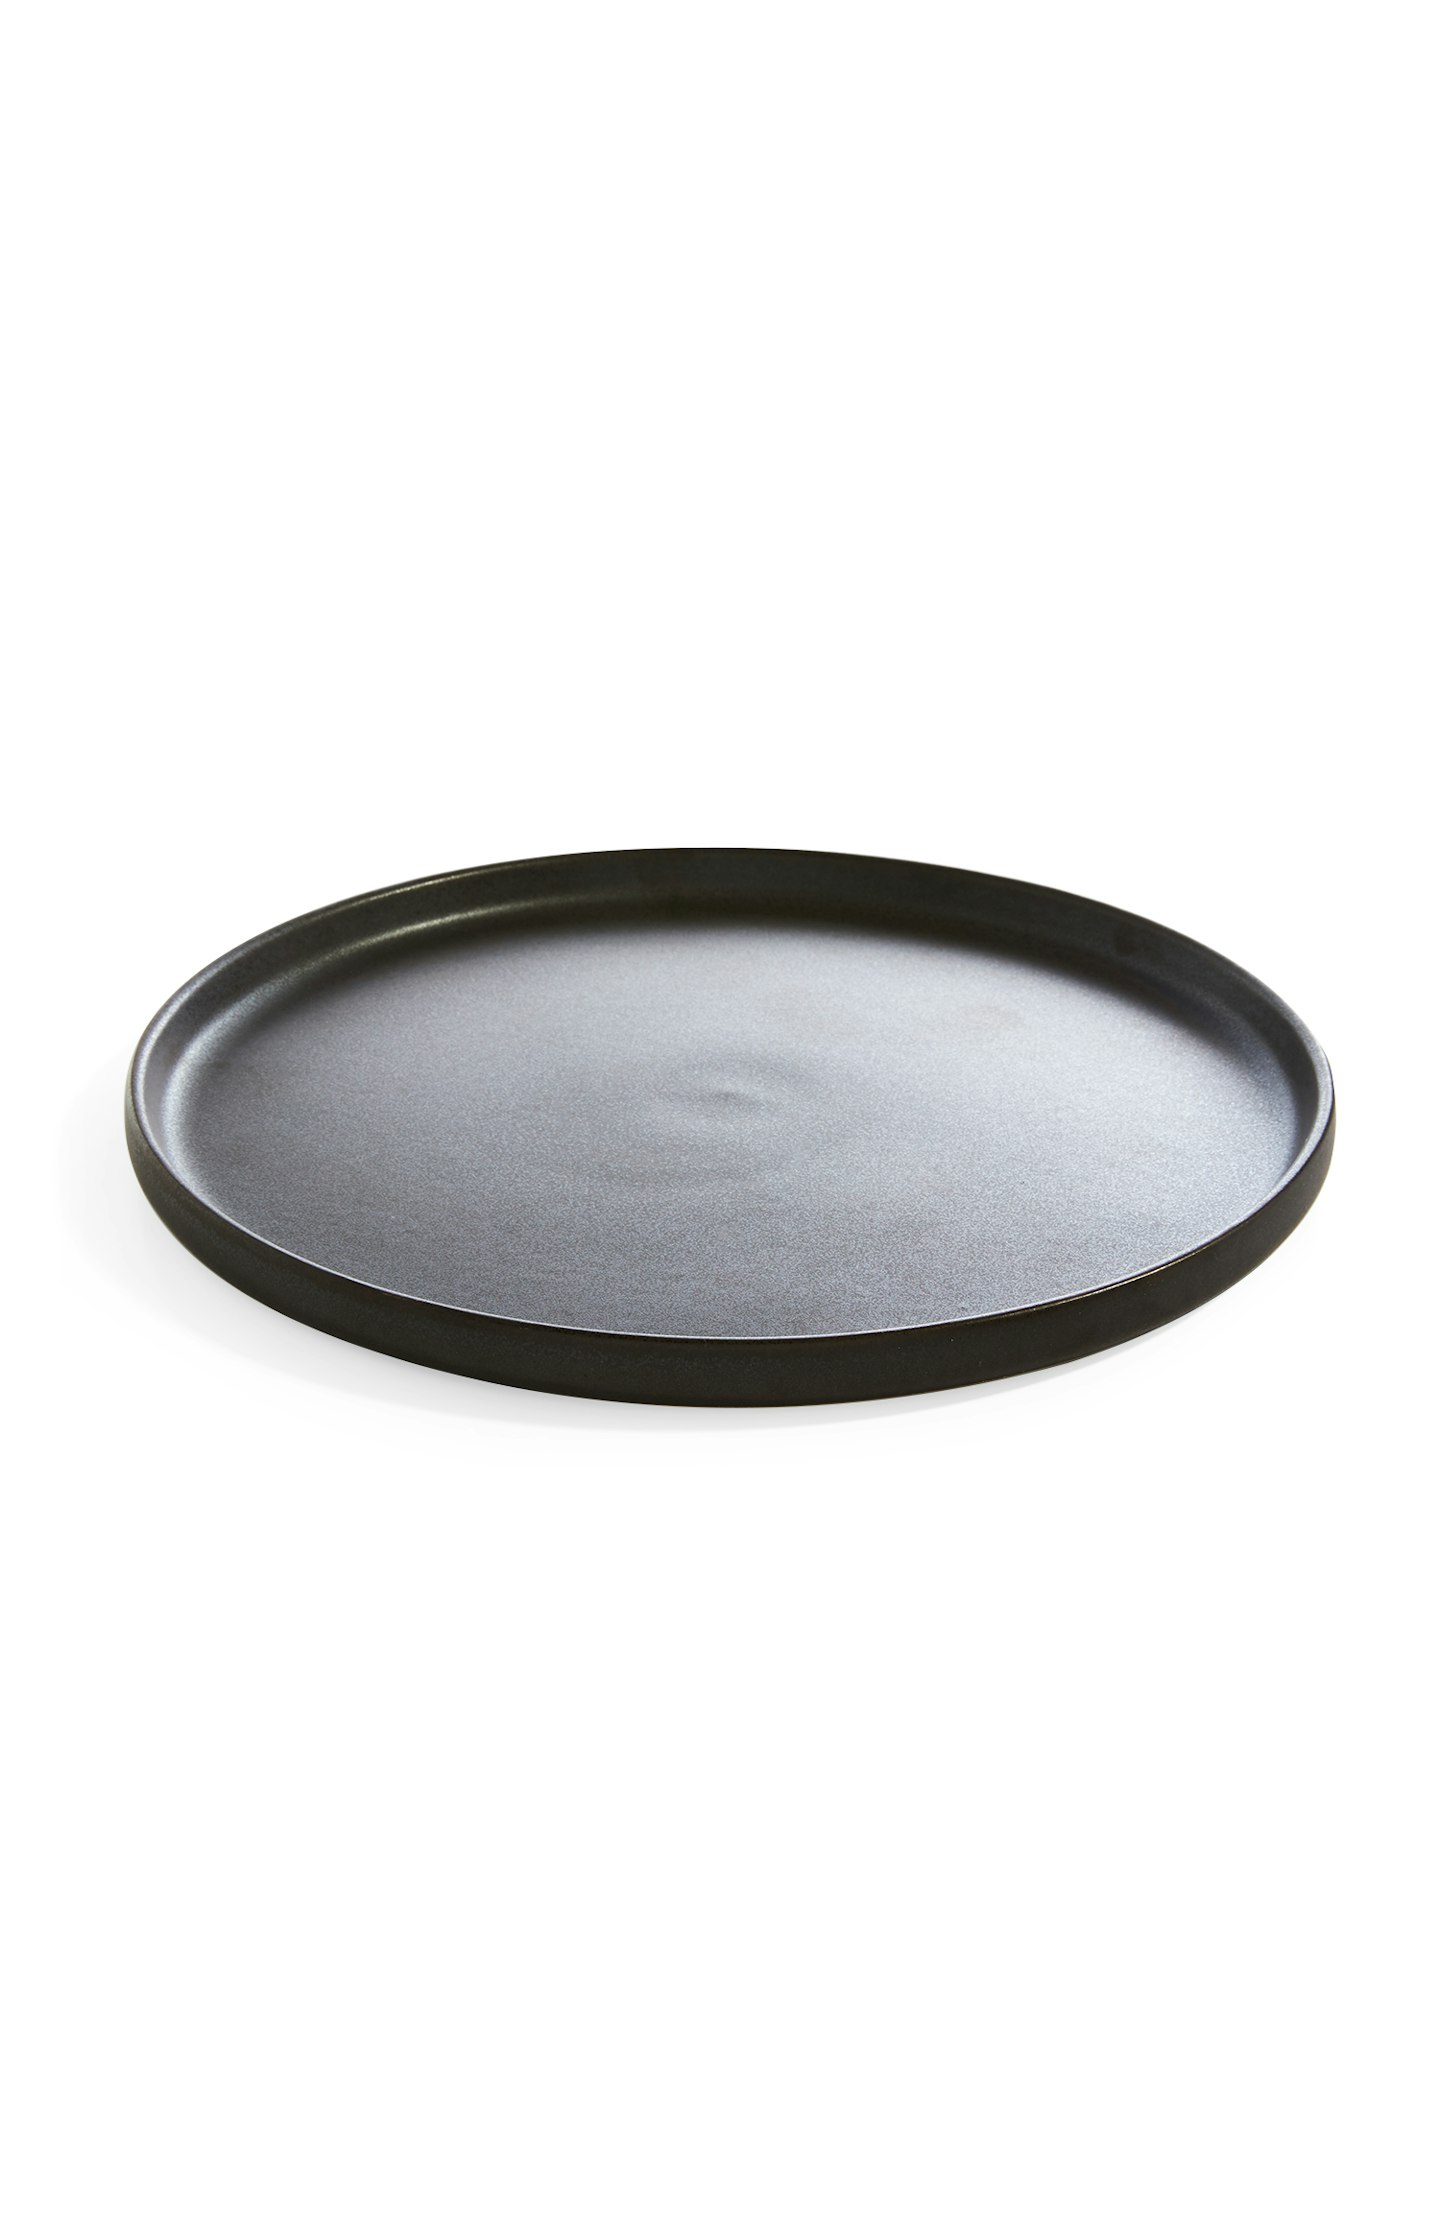 Primark, Black Ceramic Large Plate, £3.40